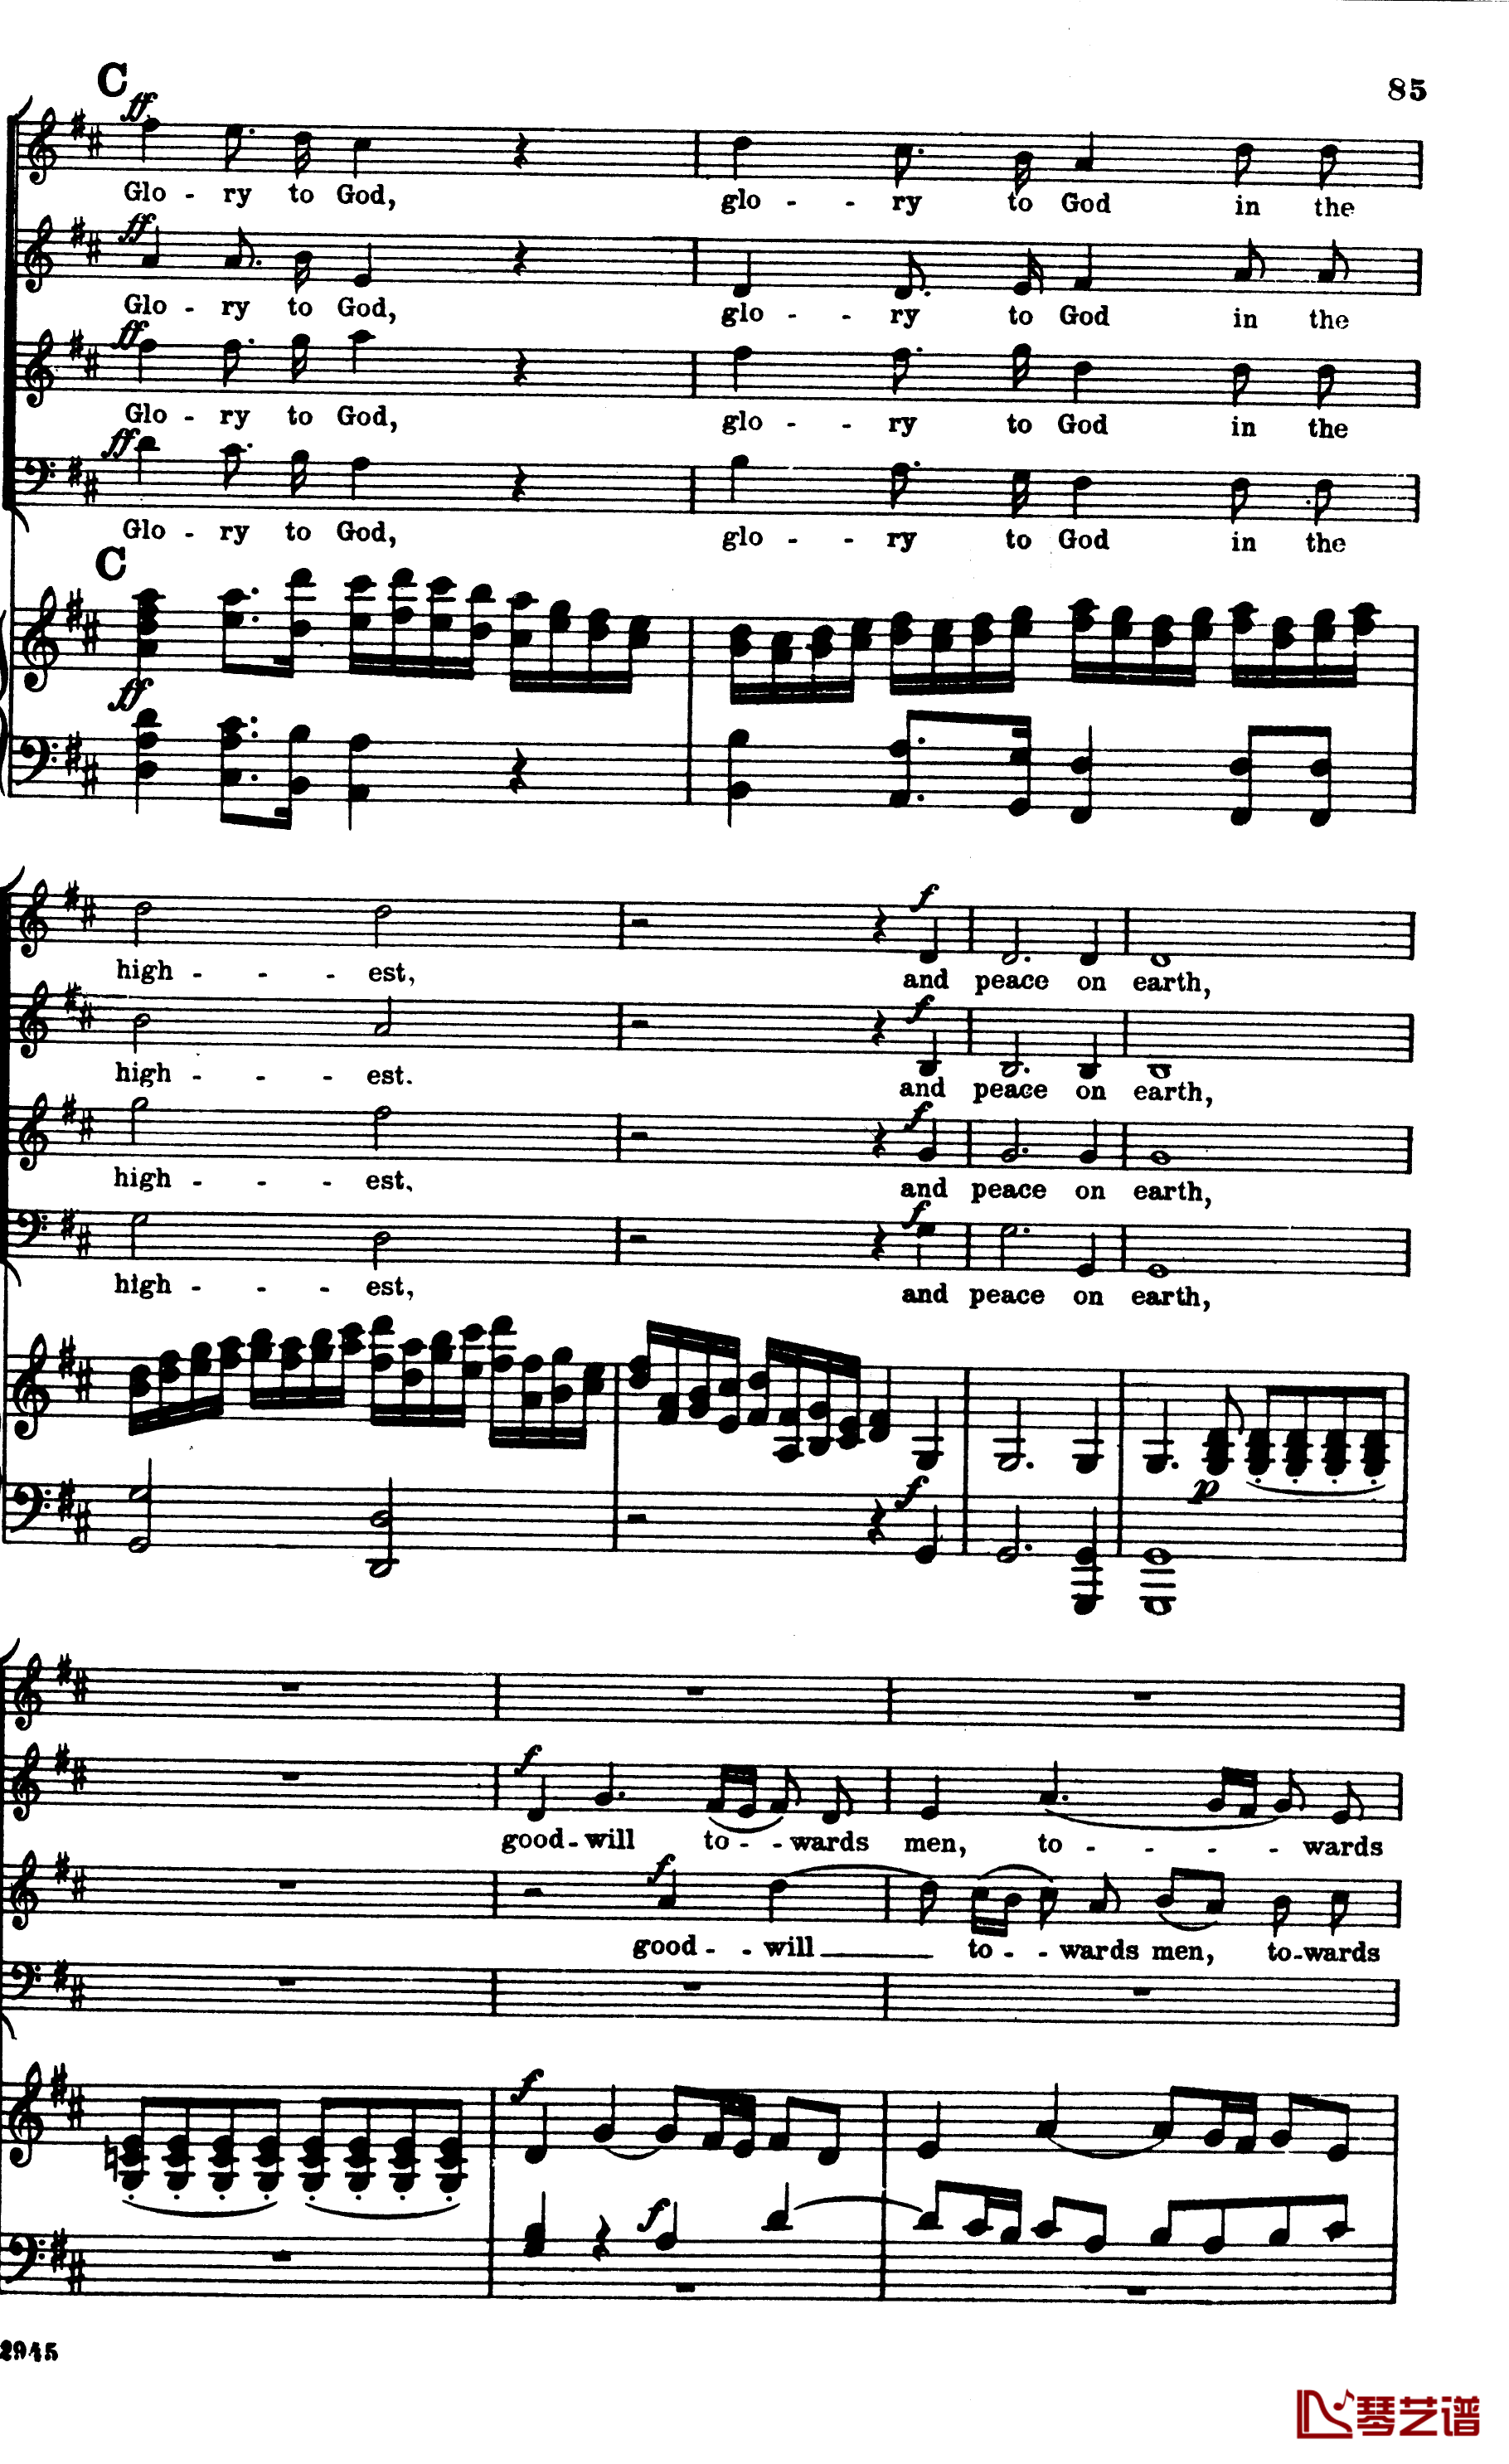 Glory to God in the highest钢琴谱-Handel4